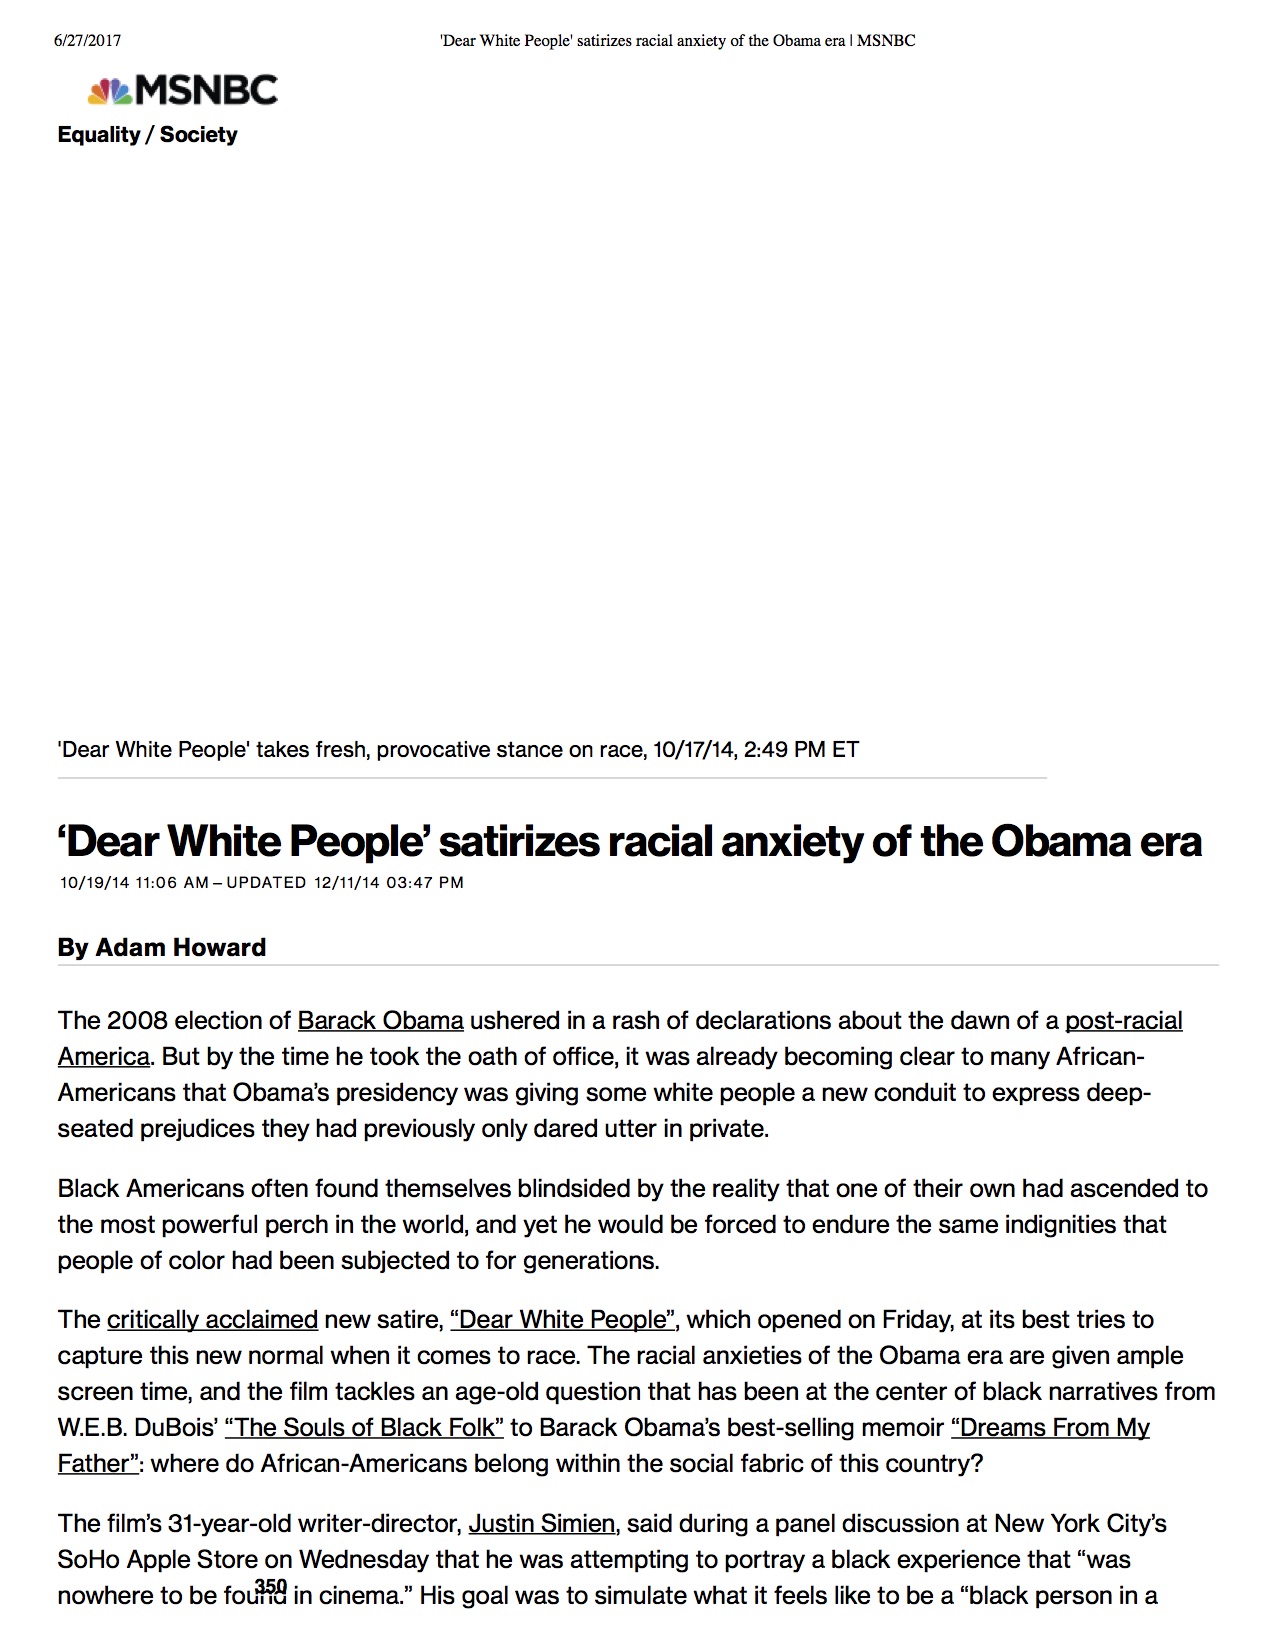 1'Dear White People' satirizes racial anxiety of the Obama era _ MSNBC.jpg